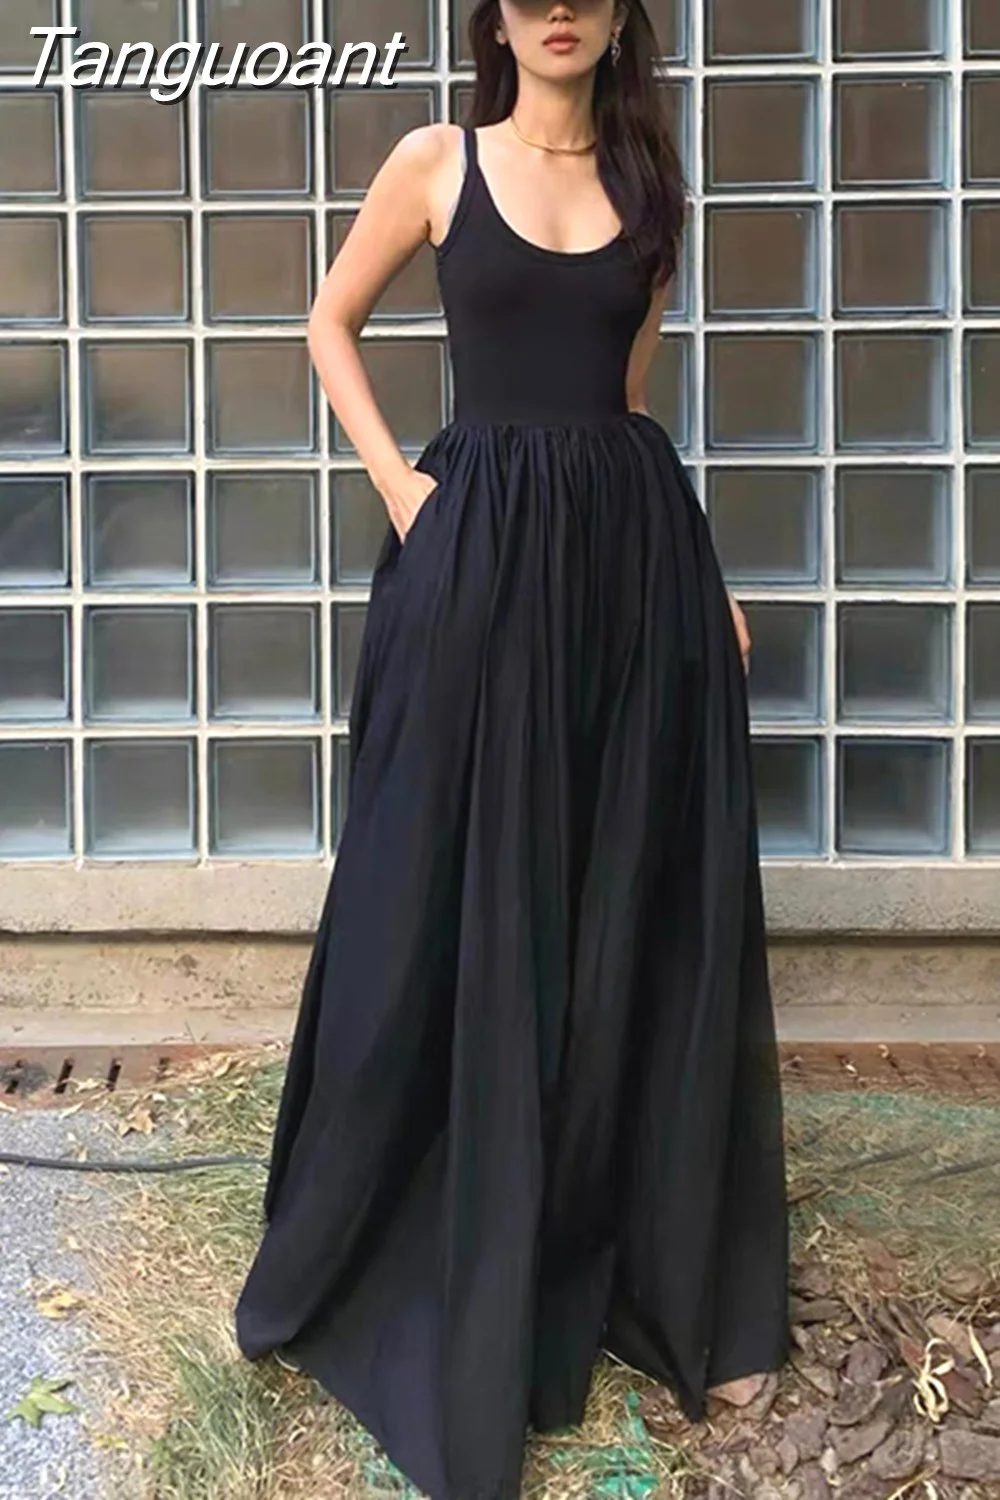 Tanguoant Hepburn Style High Waist Sleeveless Midi Dress Women Summer Slim A Line Camis Dress Gothic Black Pleated Party Night Dress